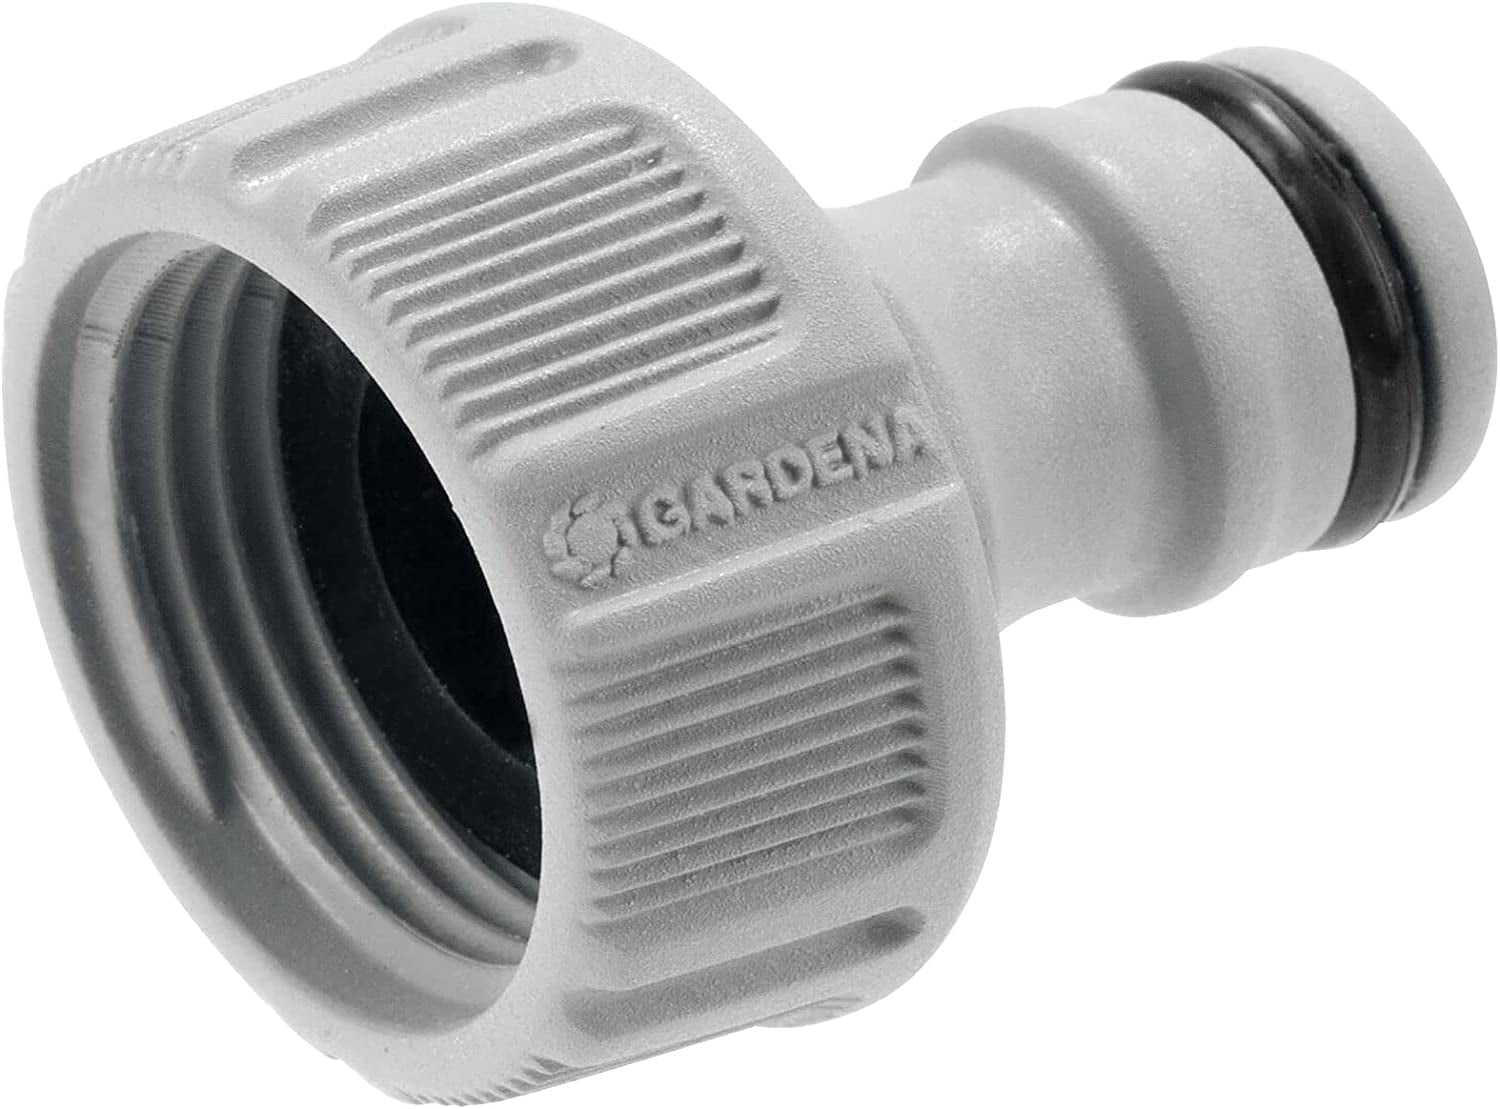 Doe mijn best Leed land Epcany Tap nose (G 3/4 inch): OGS adapter for connecting a garden hose,  splash-proof technology, frost-proof, bulk (18221) - Walmart.com